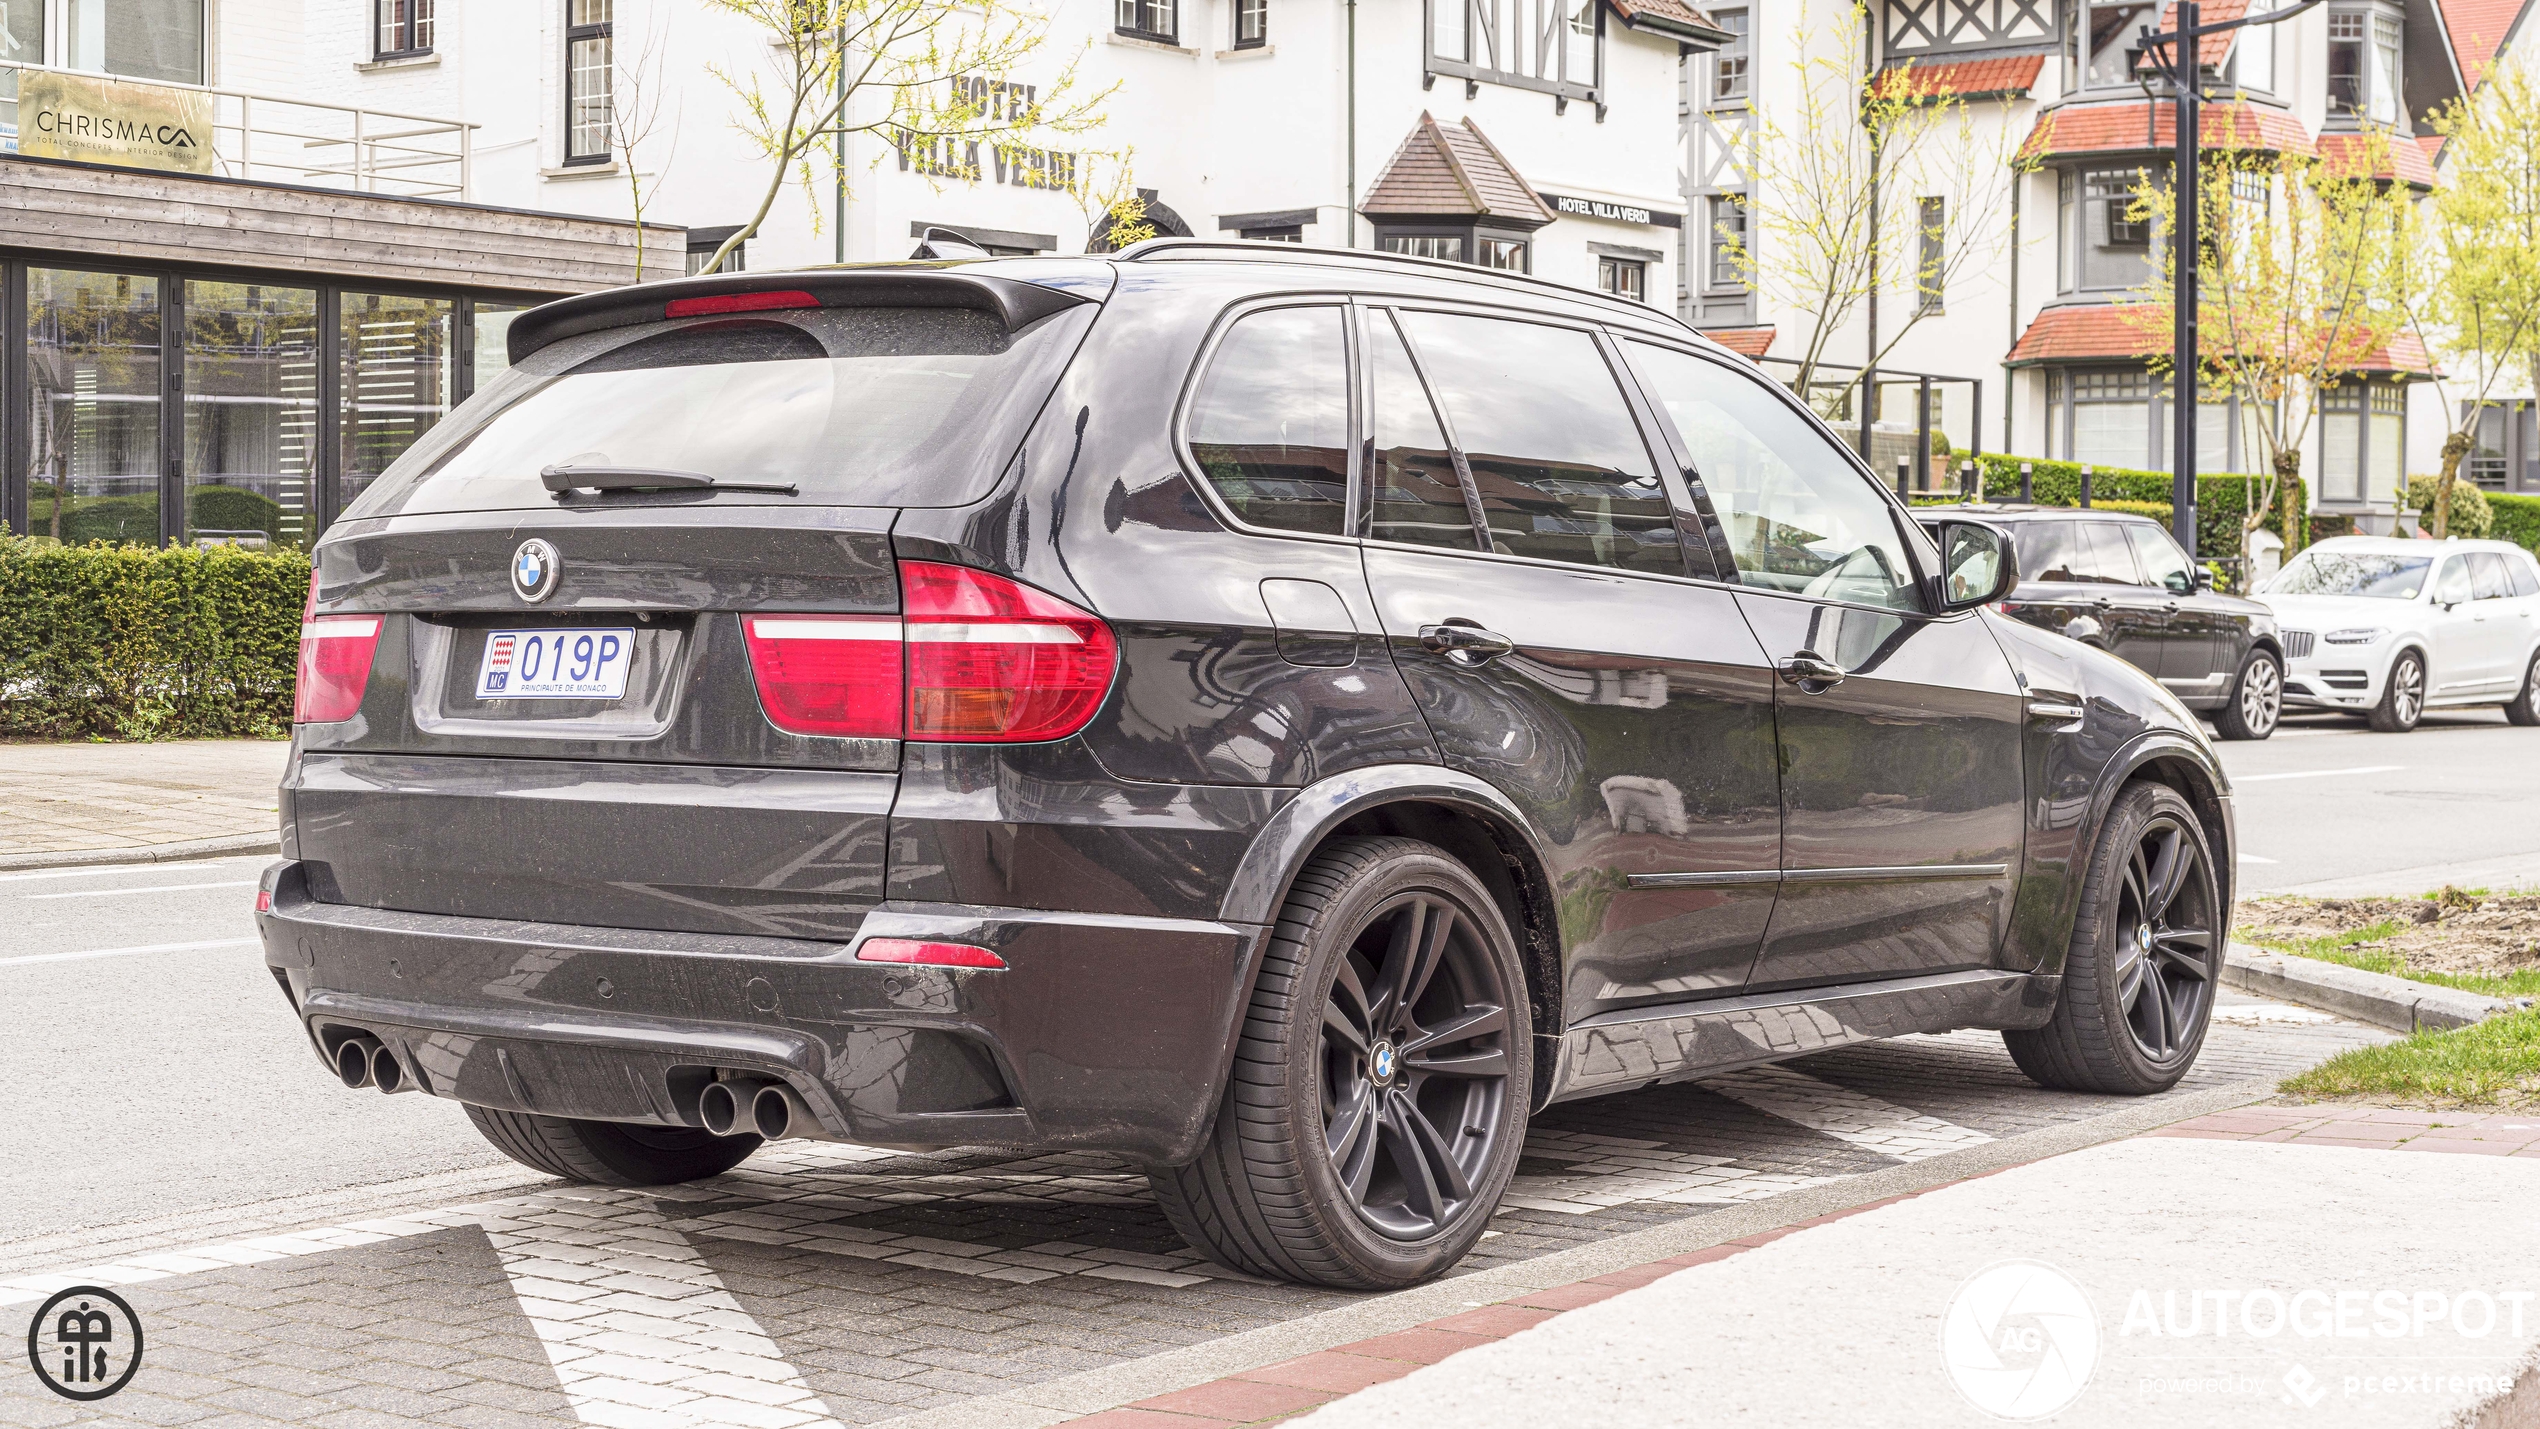 BMW X5 M E70 - 20-06-2020 22:36 - Autogespot